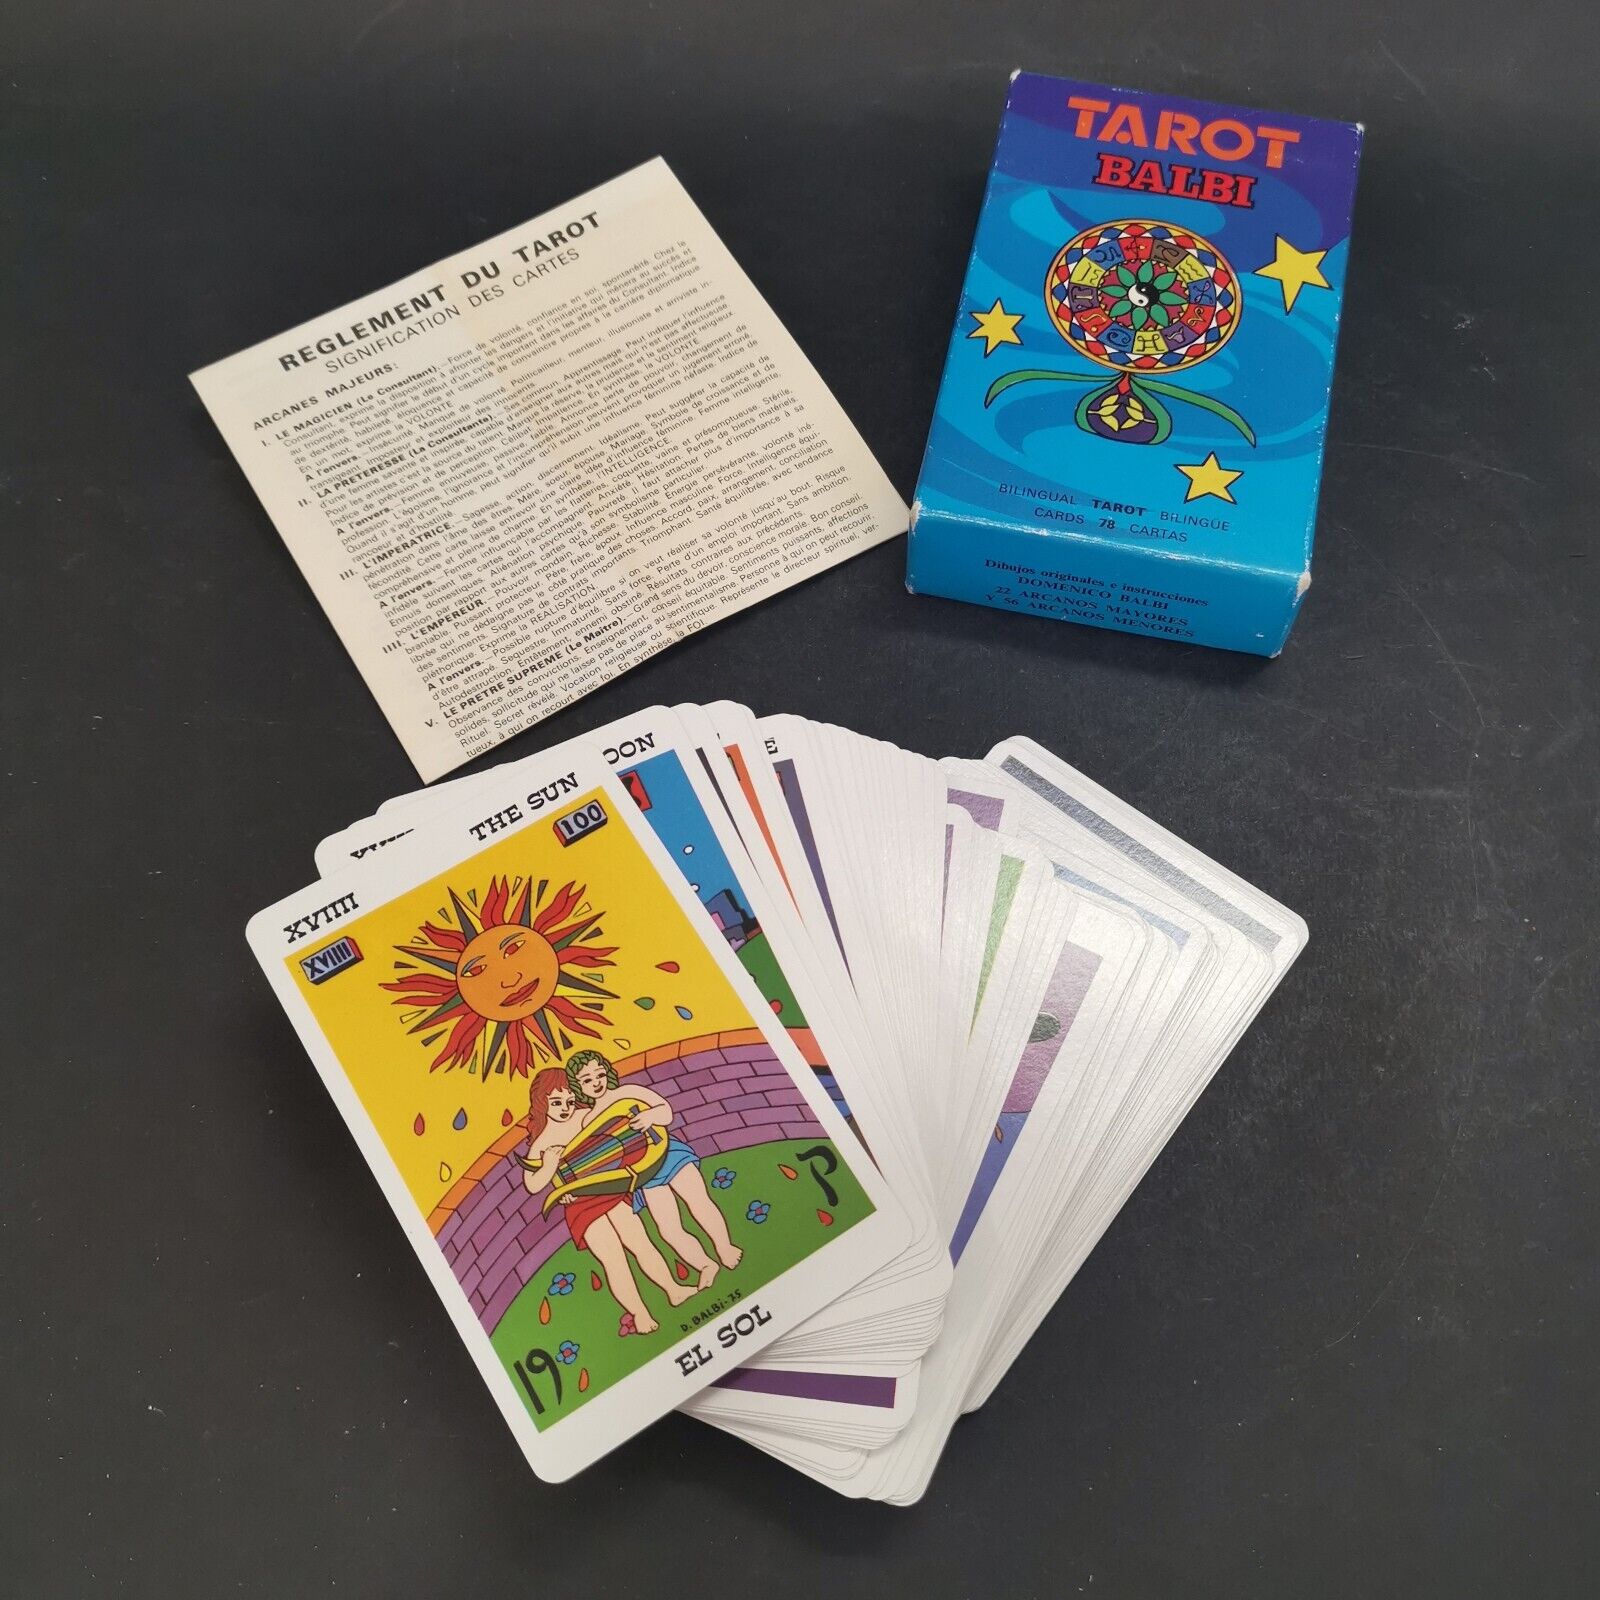 BALBI tarot game at Editions Fournier